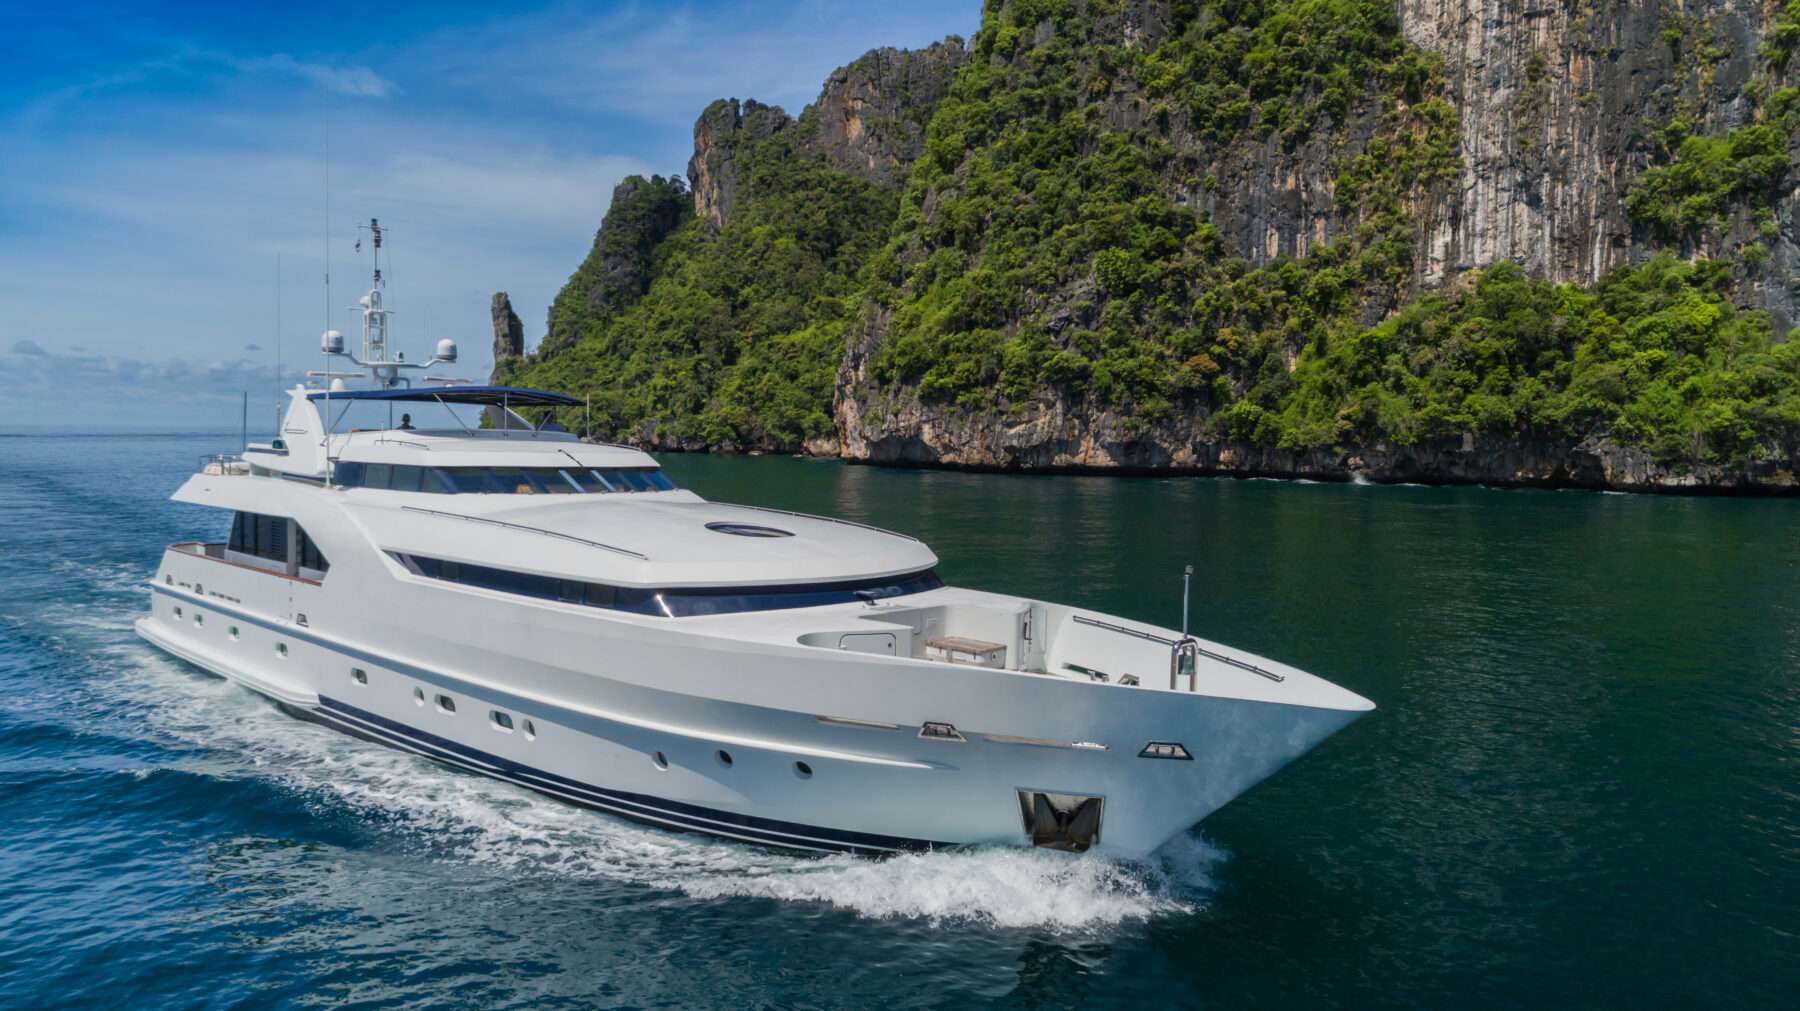 Xanadu - Superyacht charter Thailand & Boat hire in SE Asia 1